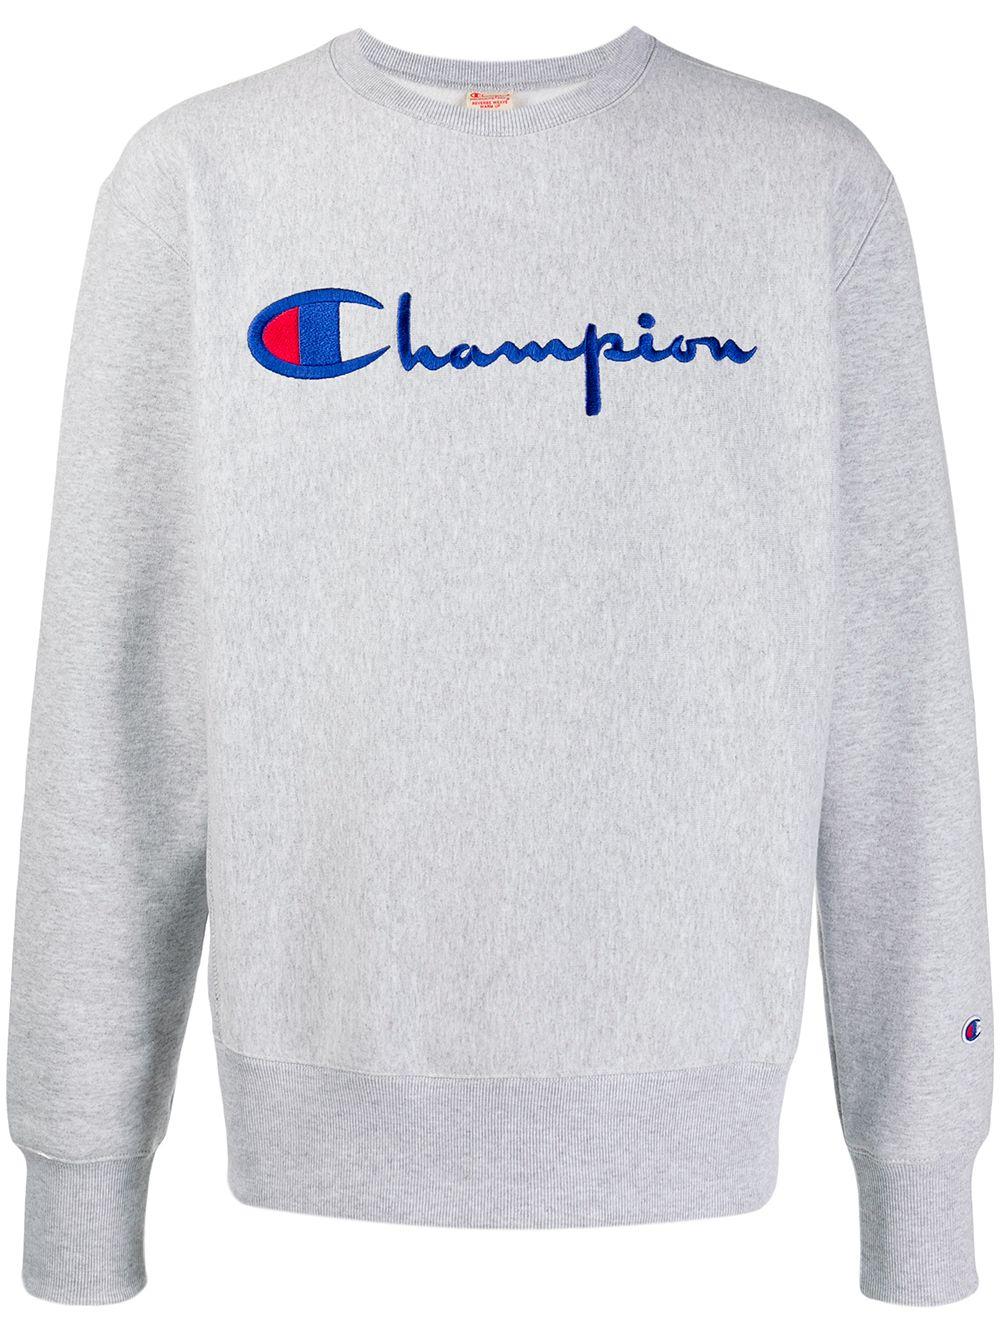 grey champion jumper